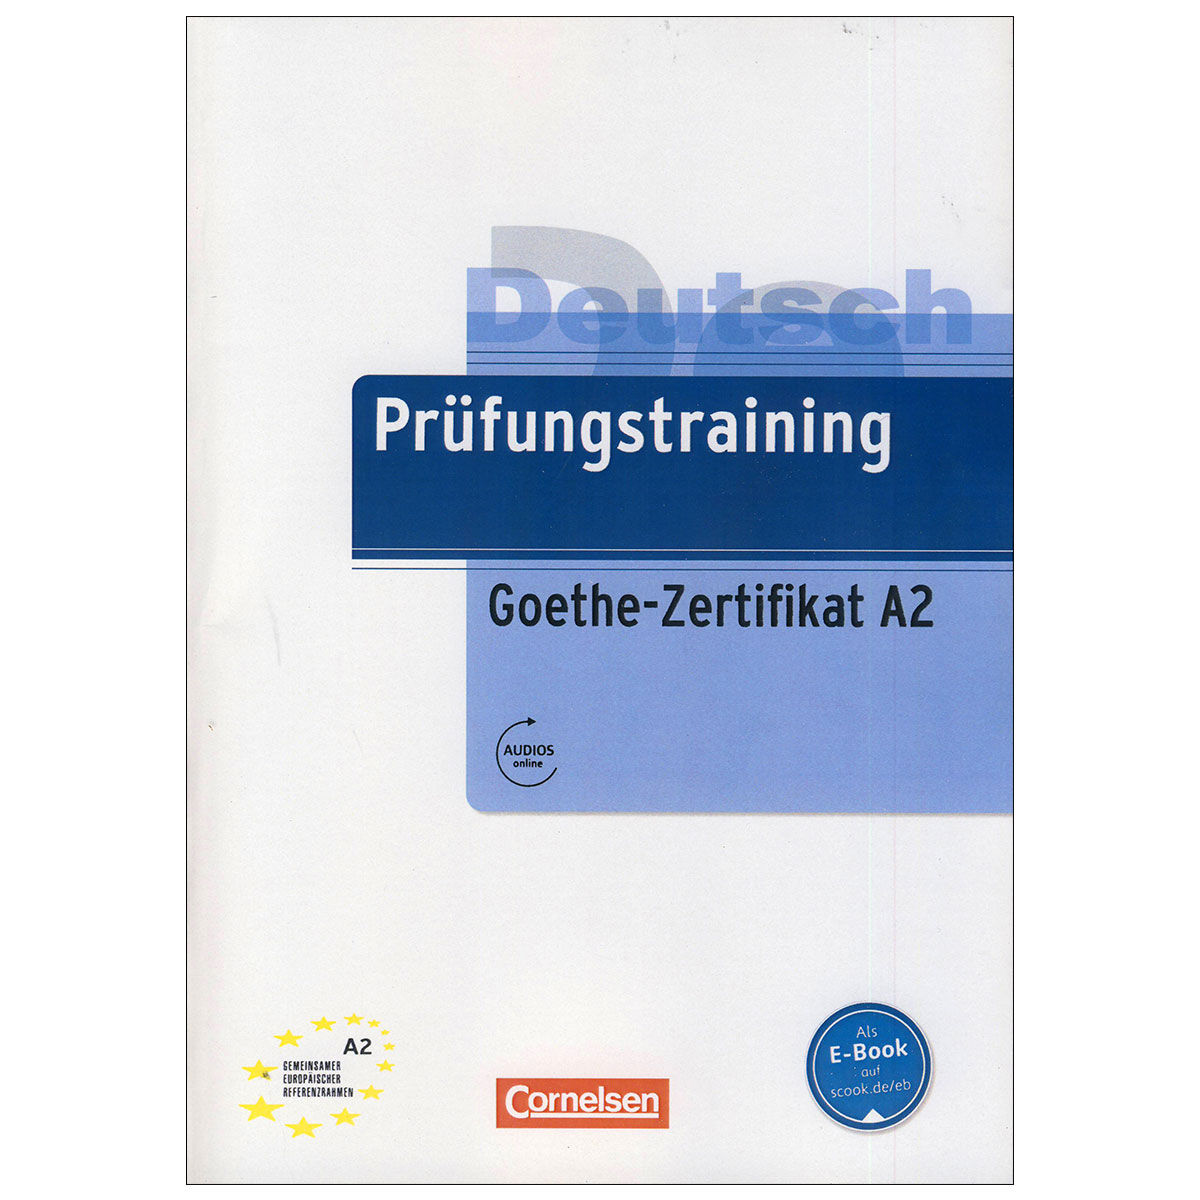 prufungstraining-Goethe-Zertifikat-A2